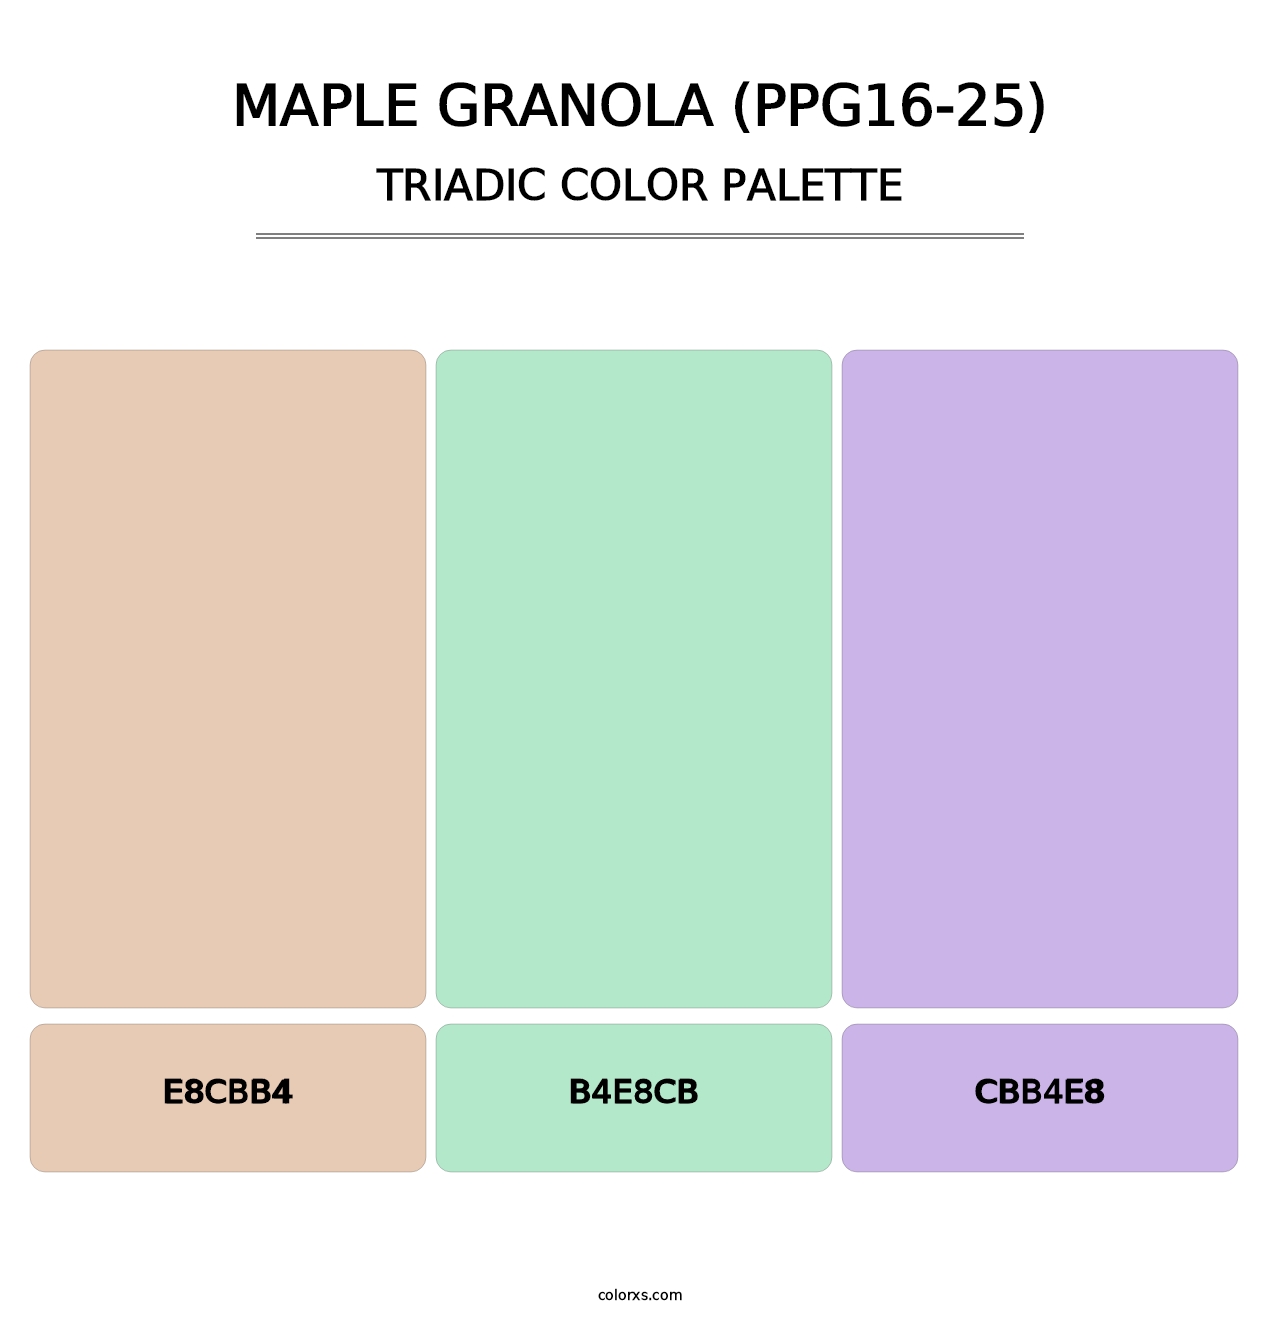 Maple Granola (PPG16-25) - Triadic Color Palette